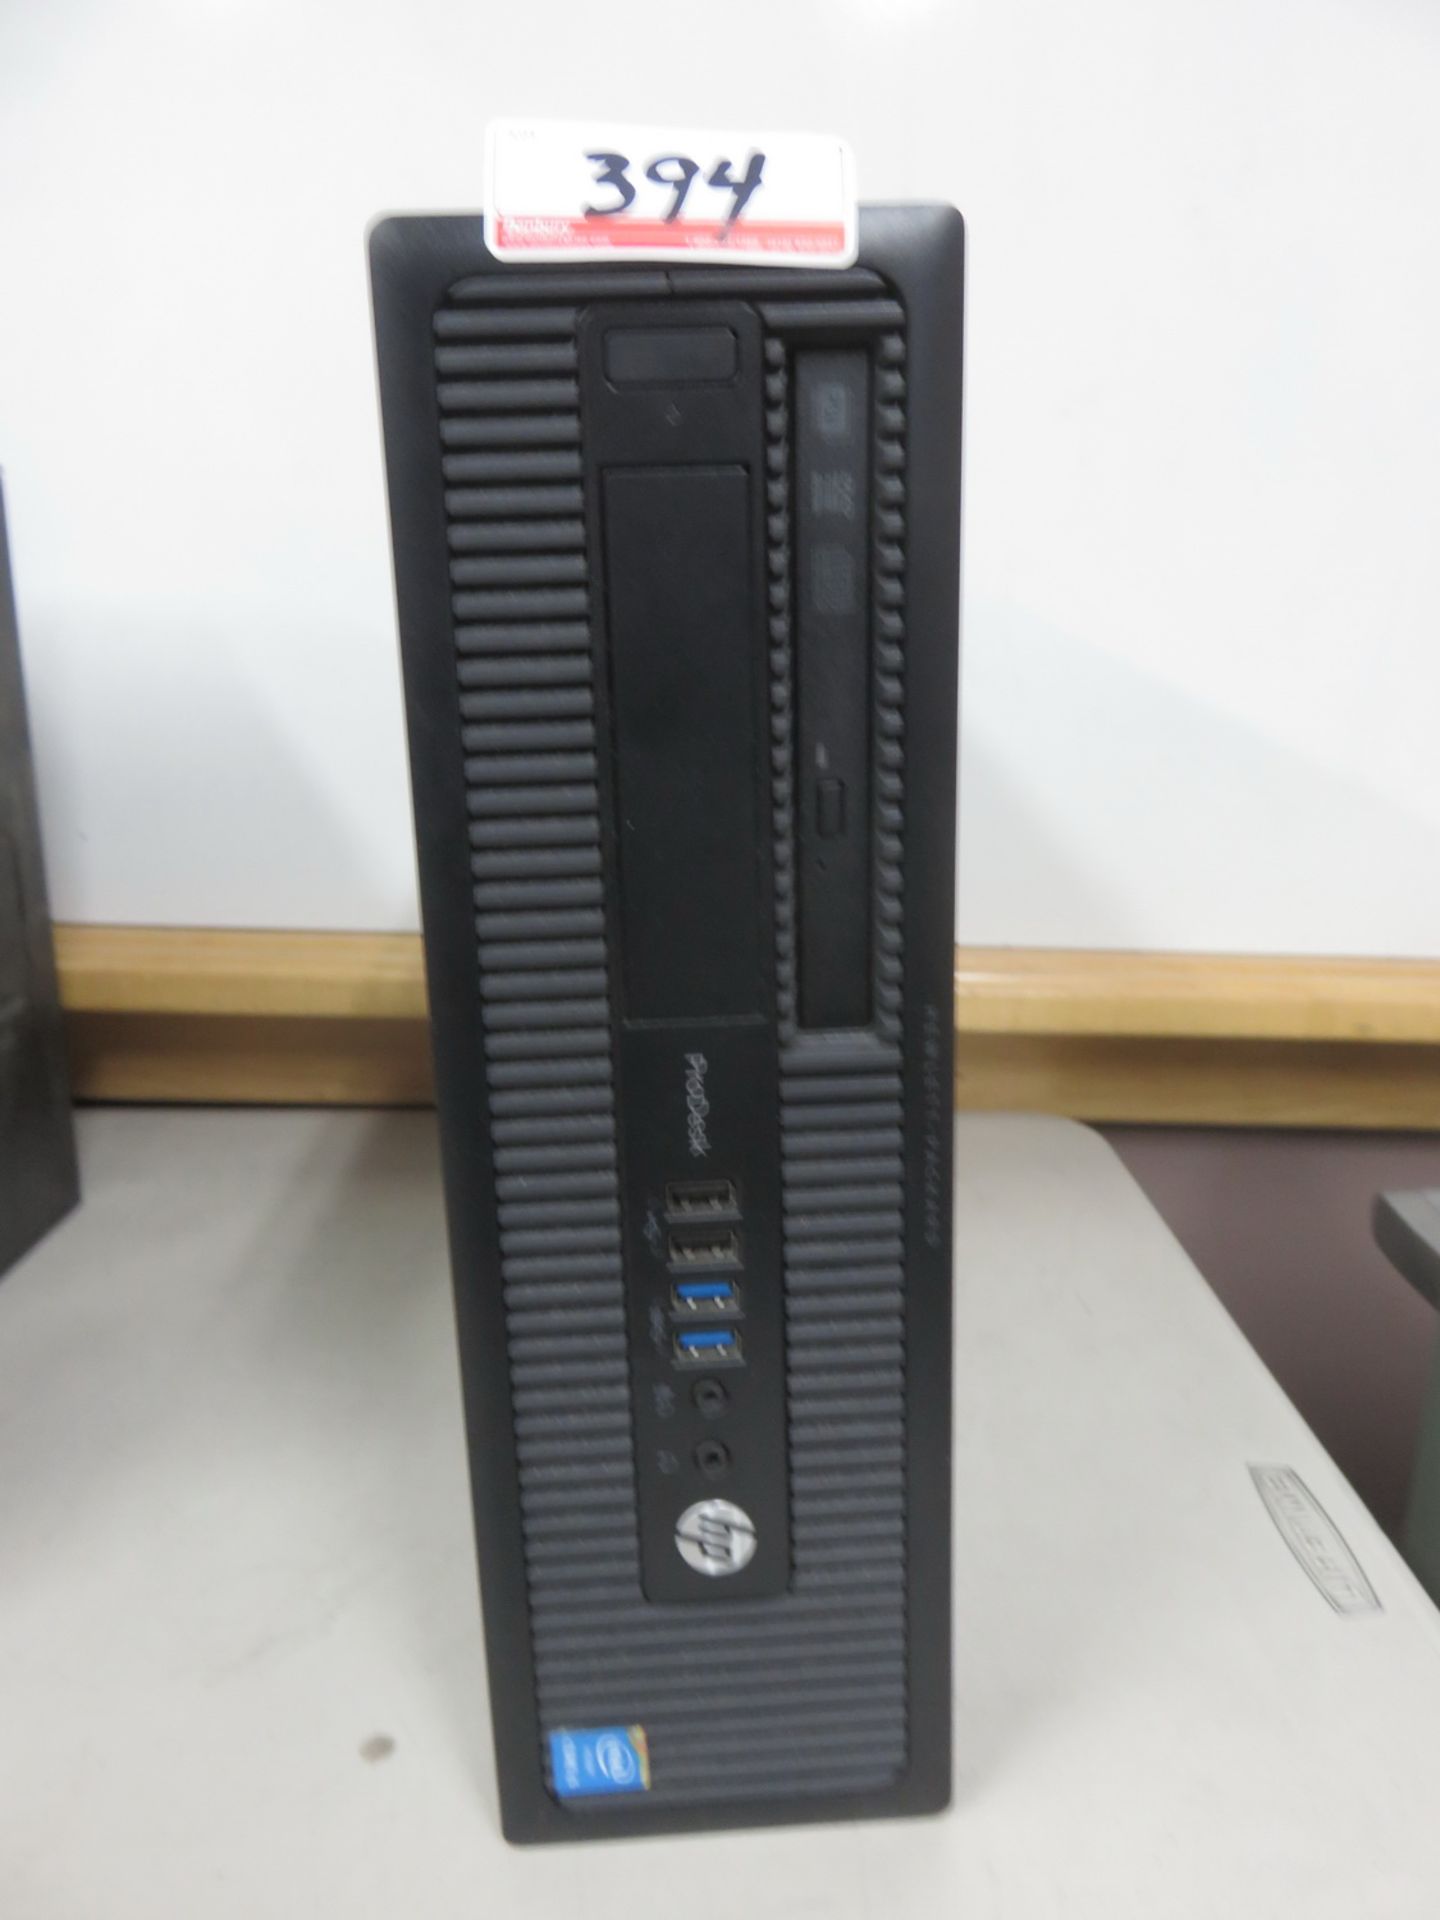 HP PRODESK 600 G1 SFF PC W/ INTEL CORE I5-4590 3.3GHZ PROCESSOR, 8GB RAM, 500GB HDD